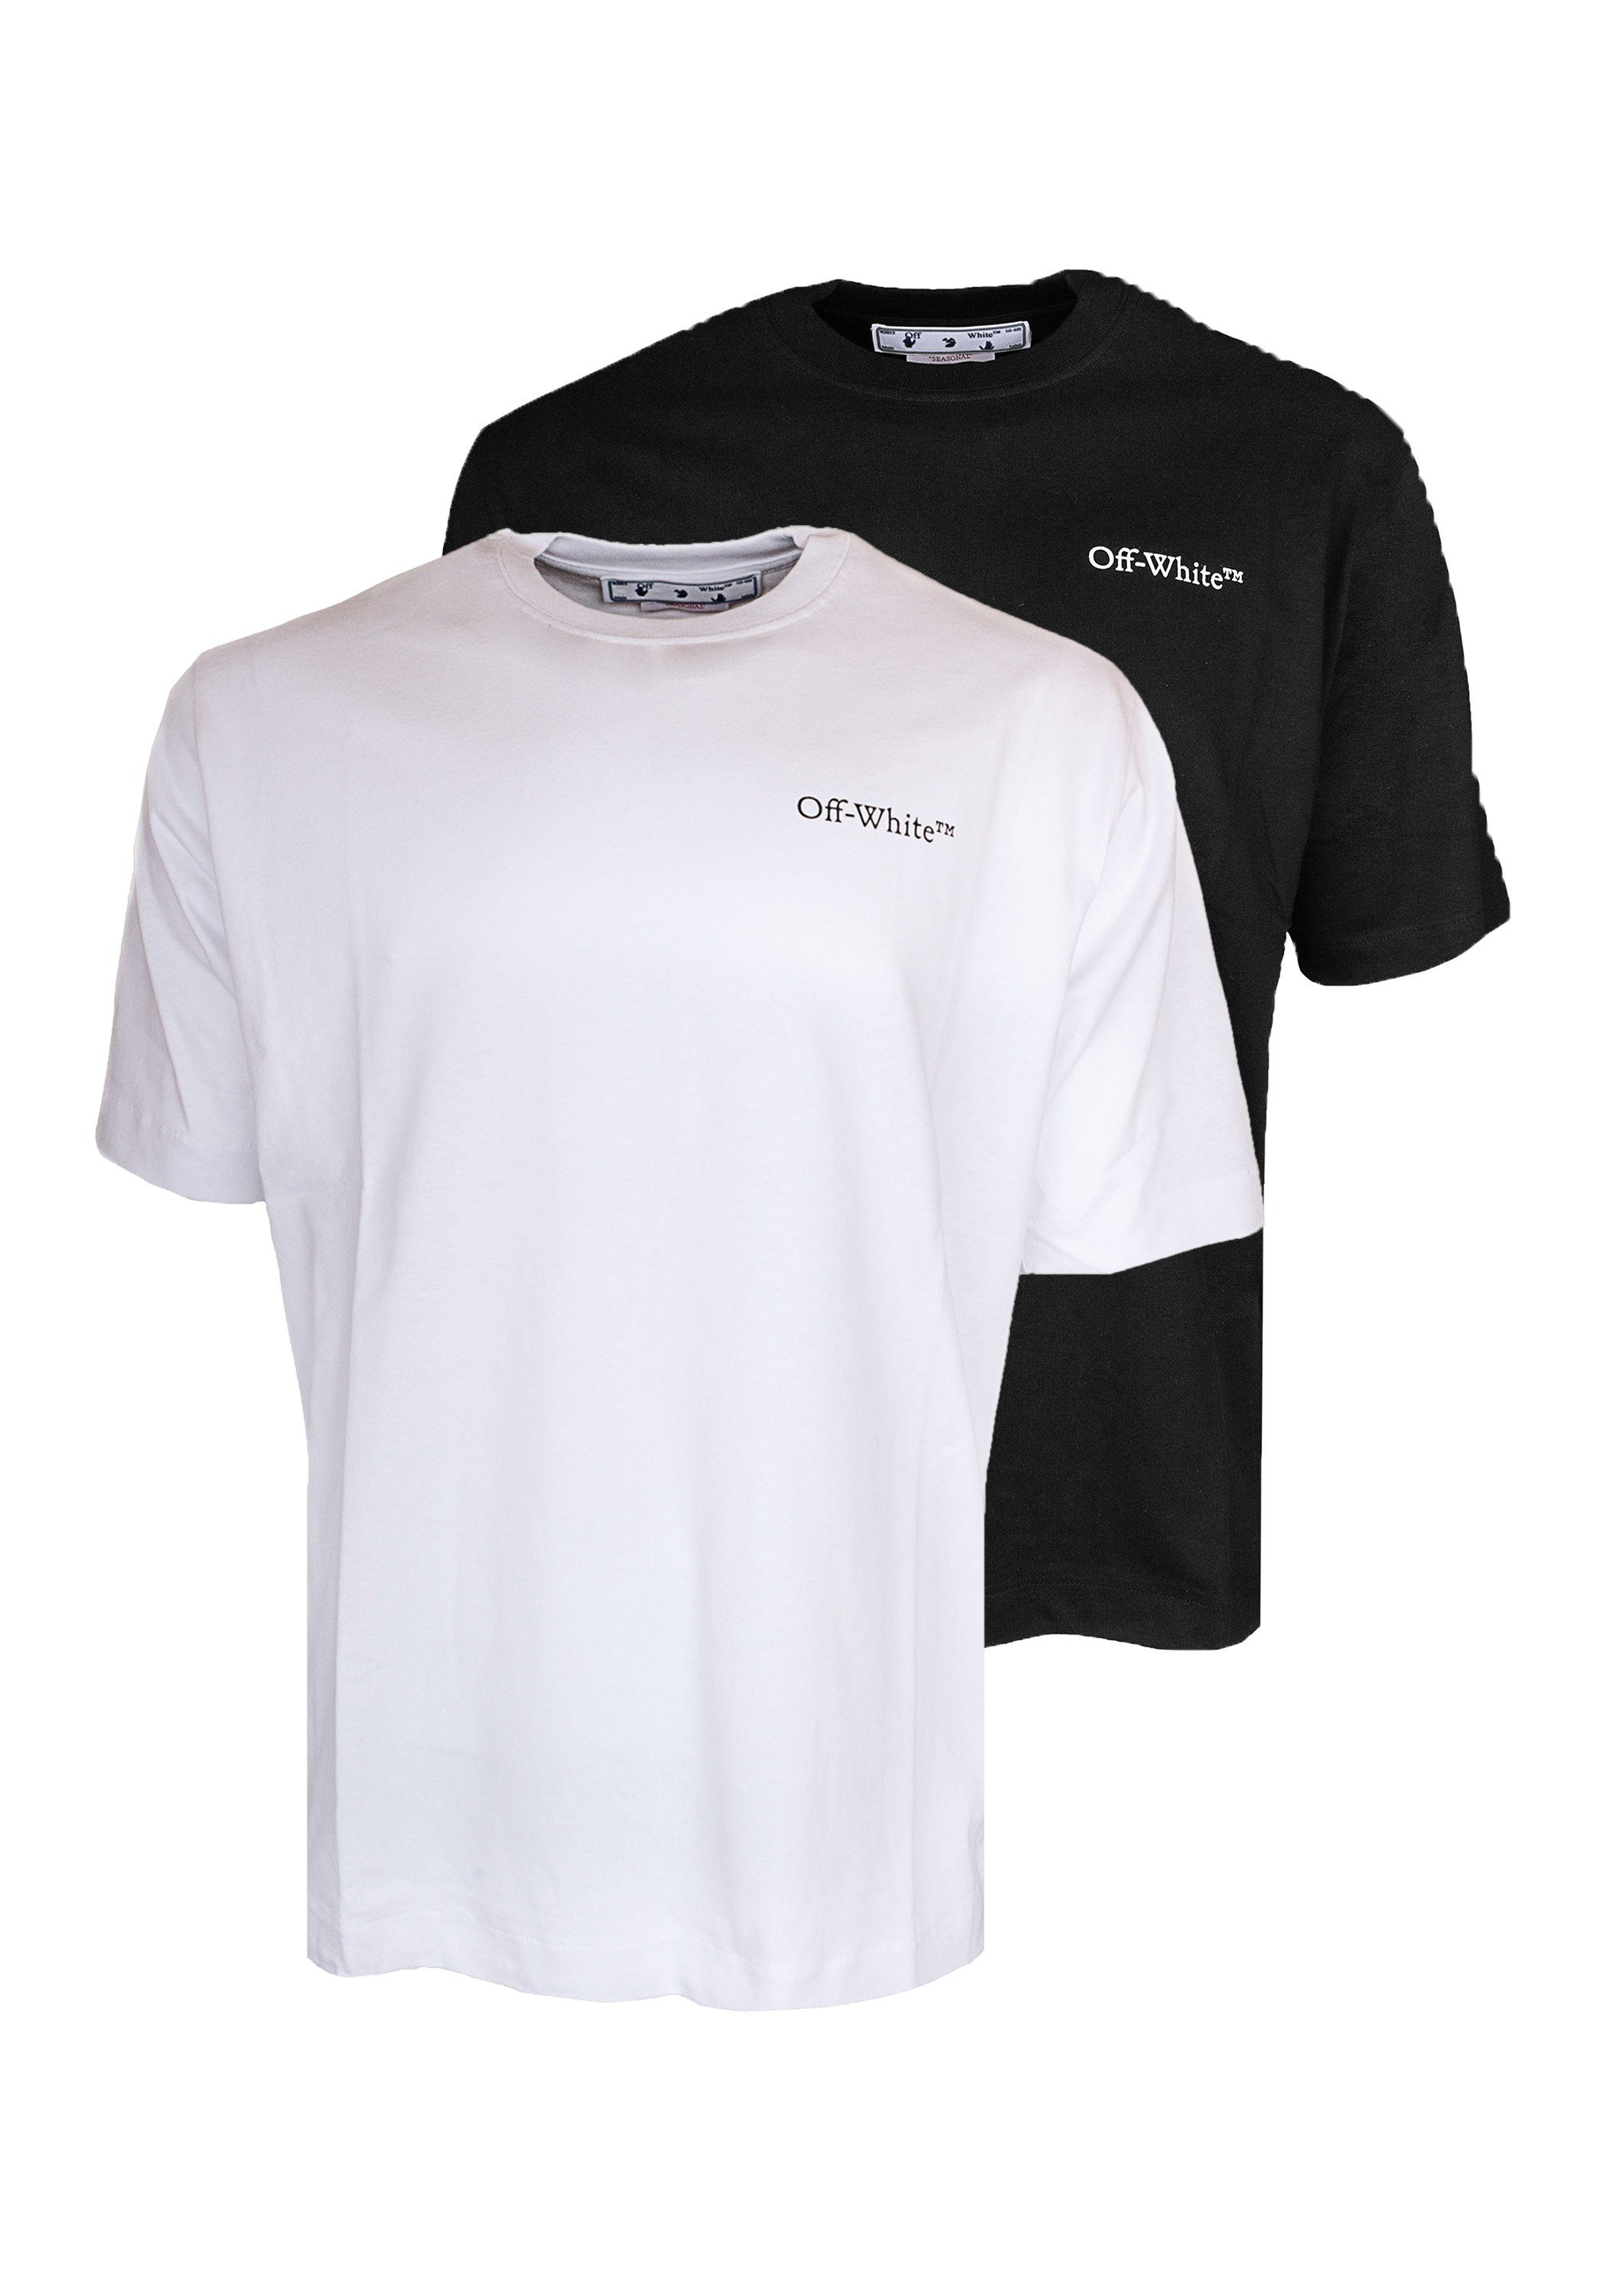 Shirt White T-Shirt OFF-WHITE T-Shirt Caravaggio Black Crowning Herren Off